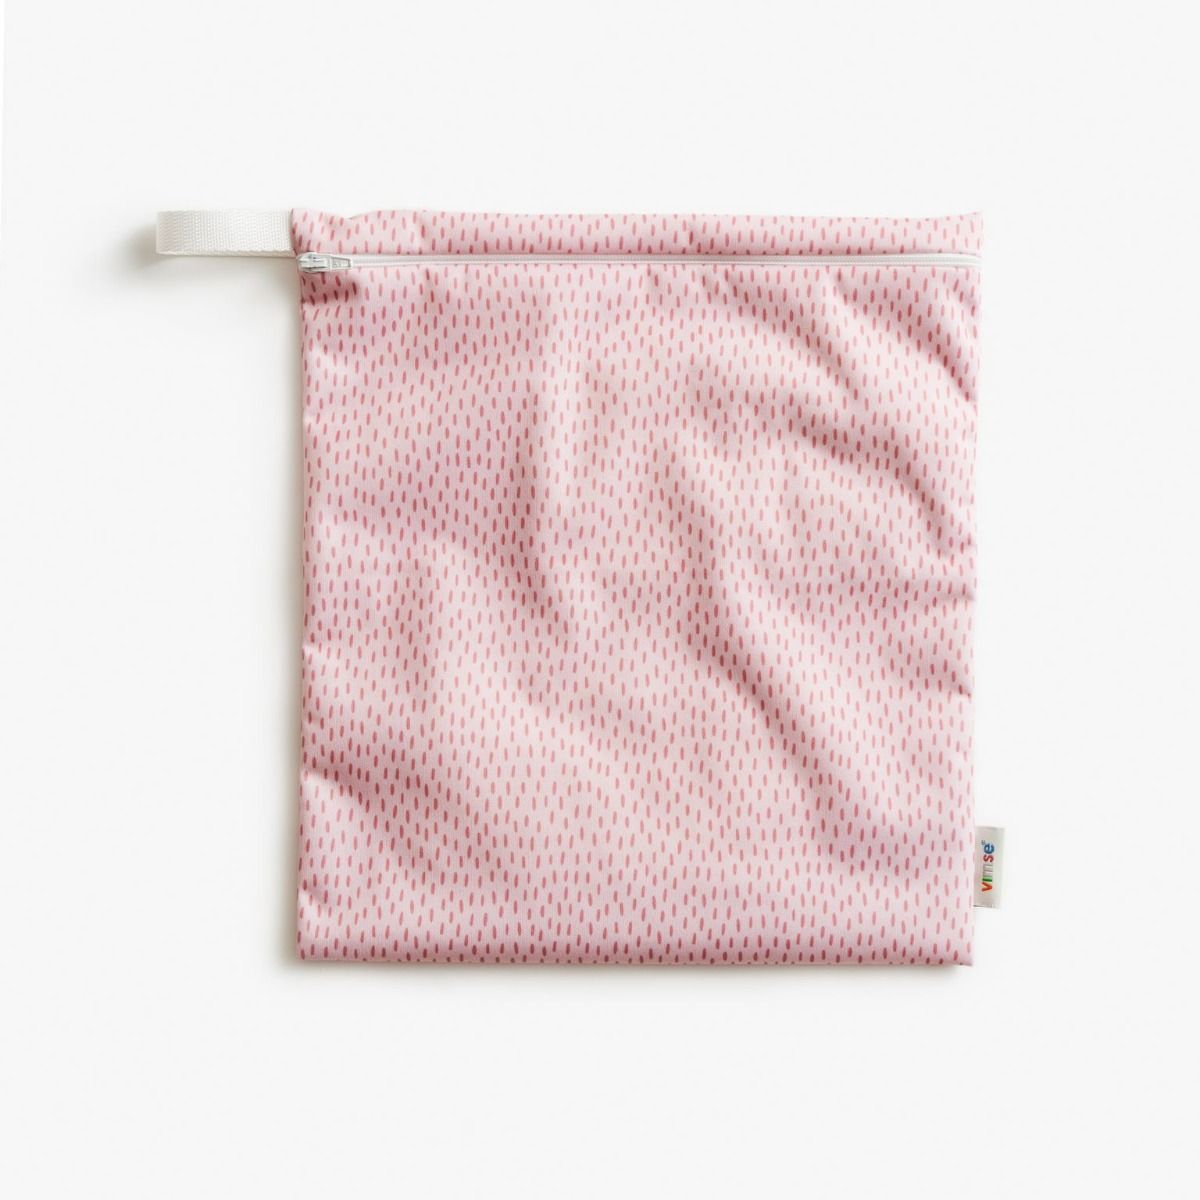 Vimse Wet Bag Medium, Pink Sprinkle M 1 st